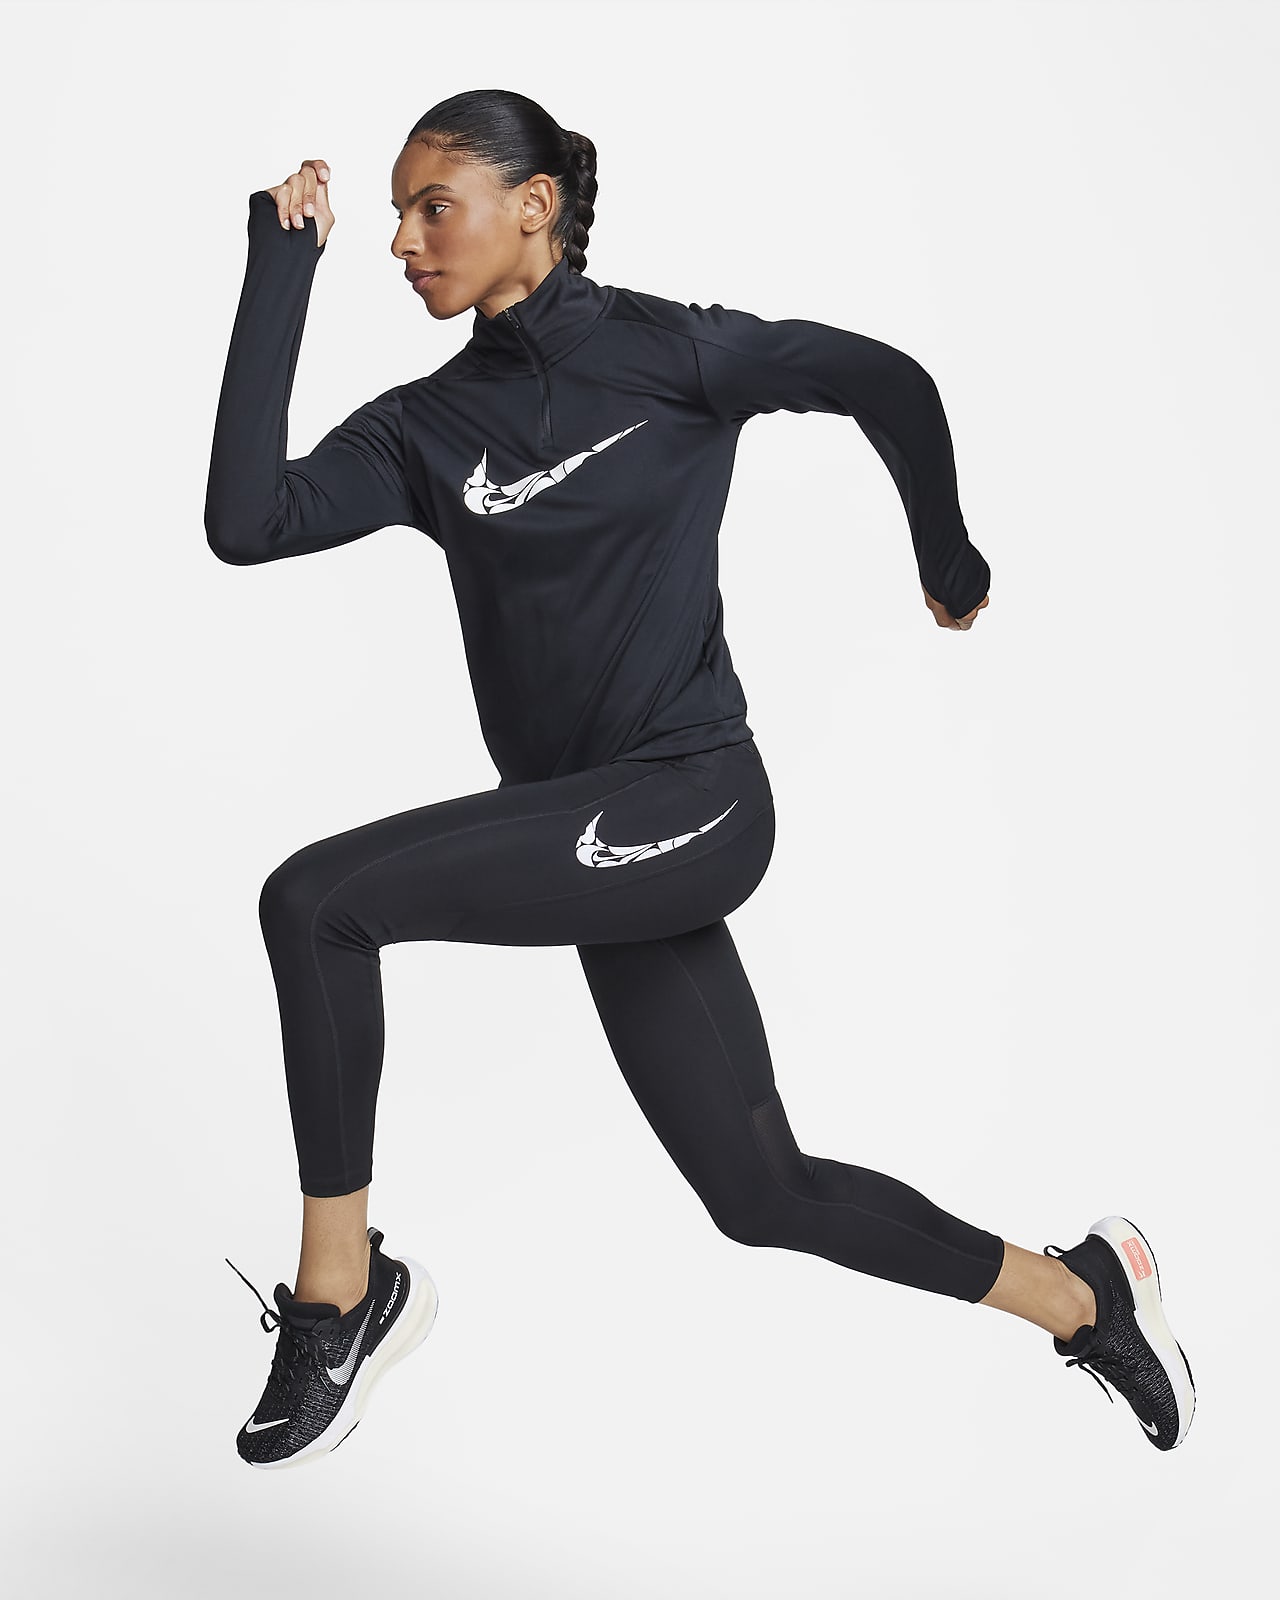 Nike Black Dri-Fit Leggings Size XS - $17 (66% Off Retail) - From